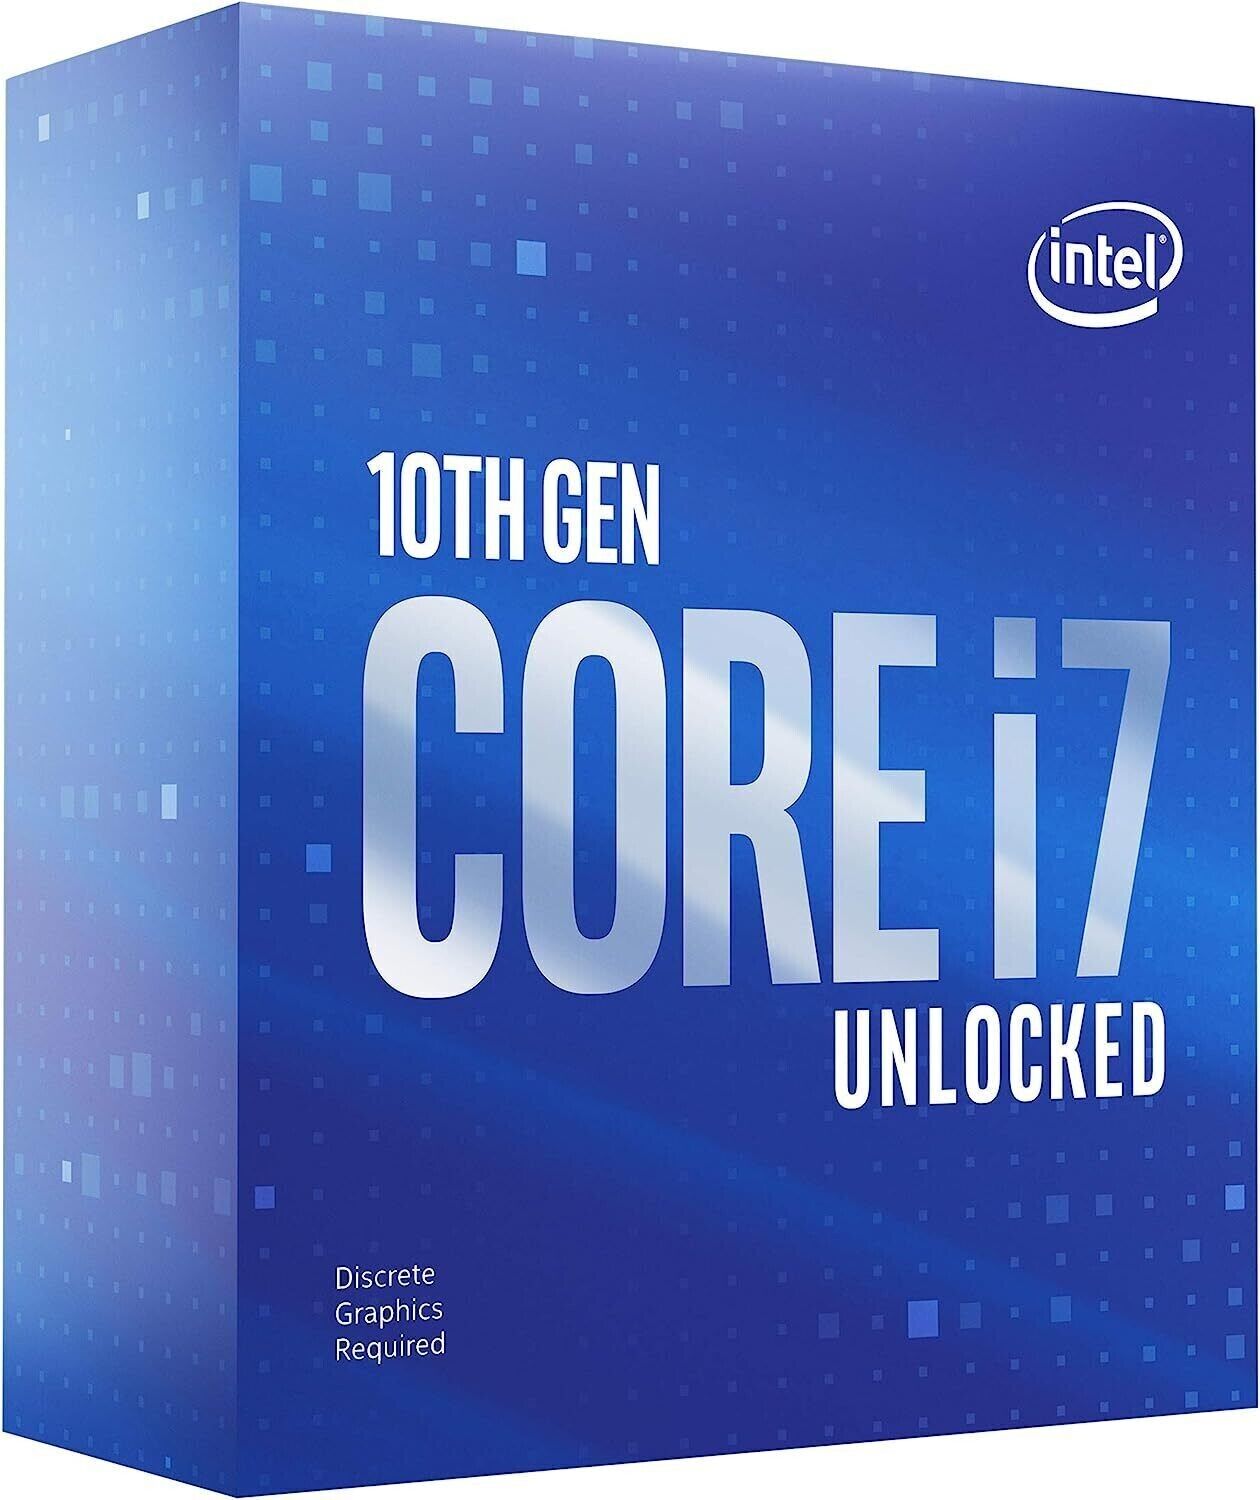 NEW in box - Intel Core i7-10700KF Processor 5.1 GHz, 8 Cores, Socket LGA1200